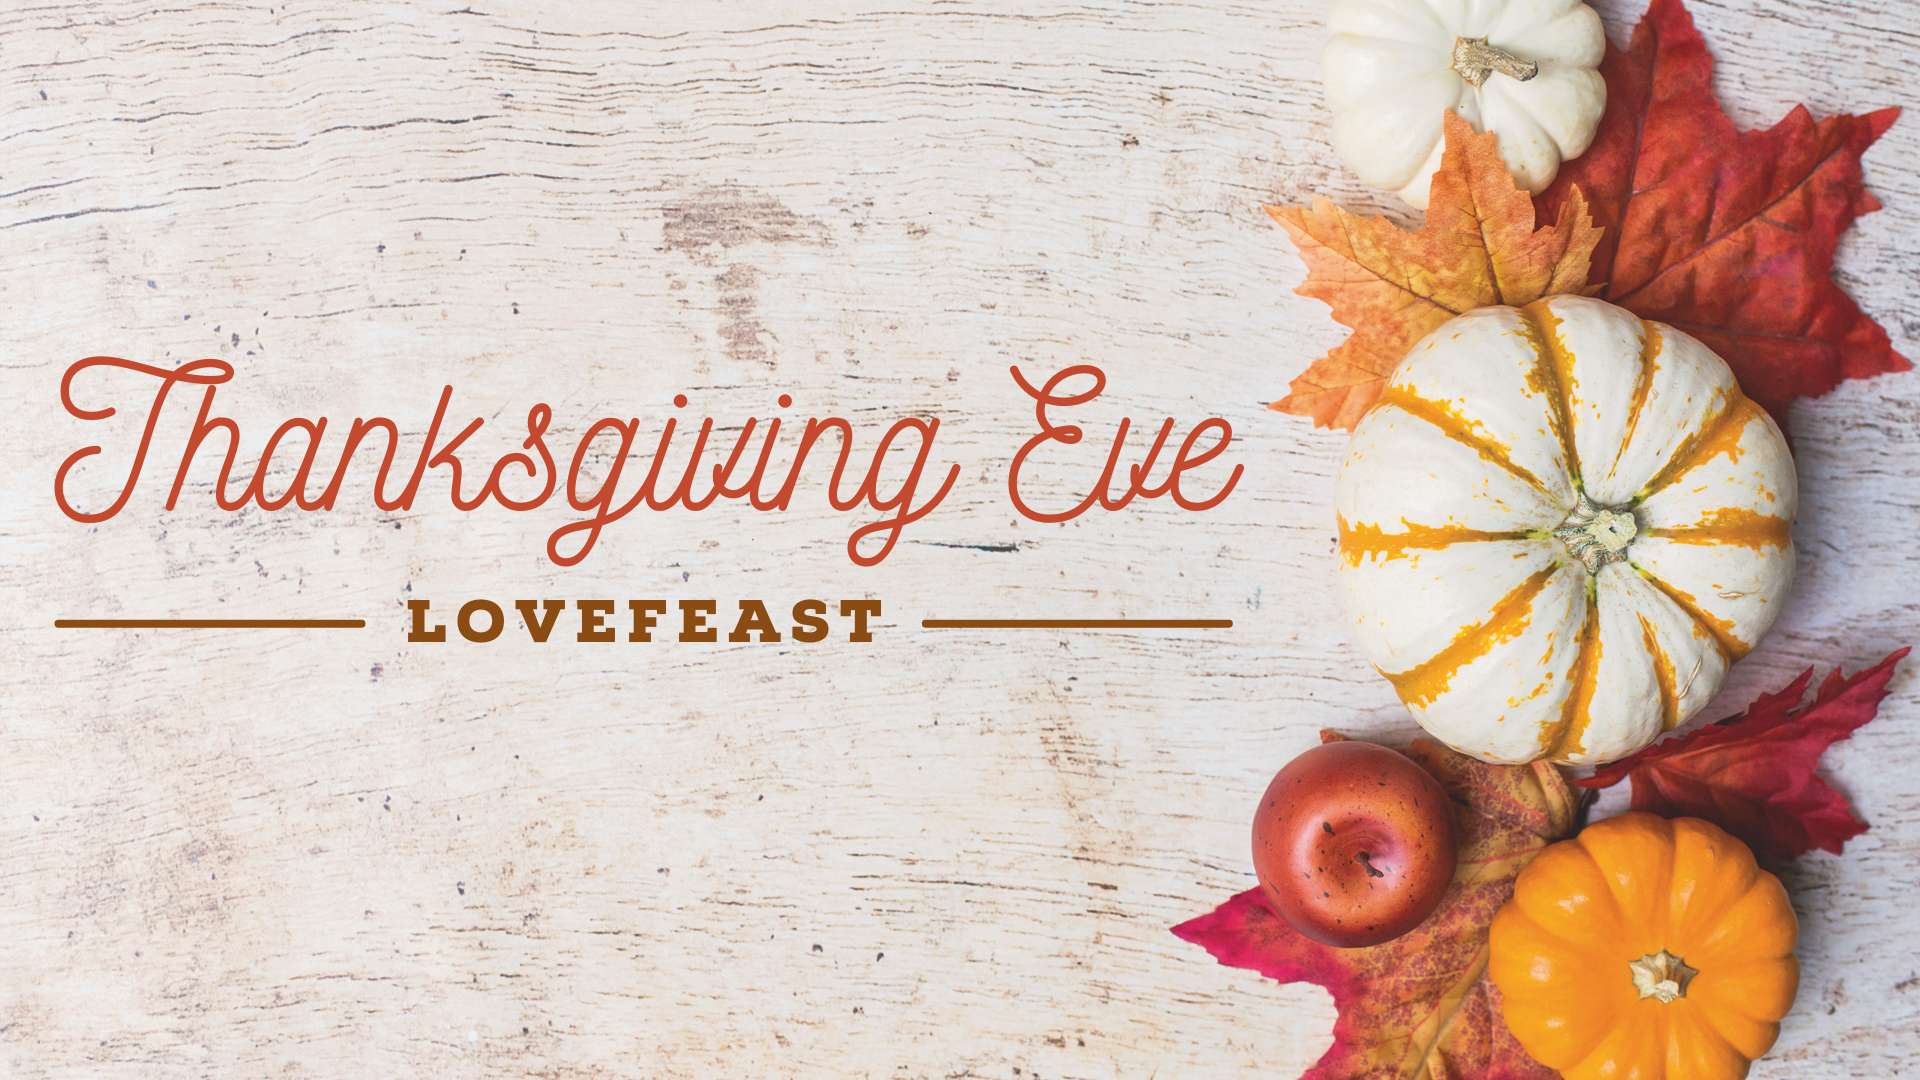 Thanksgiving Eve Lovefeast Friedberg Moravian Church